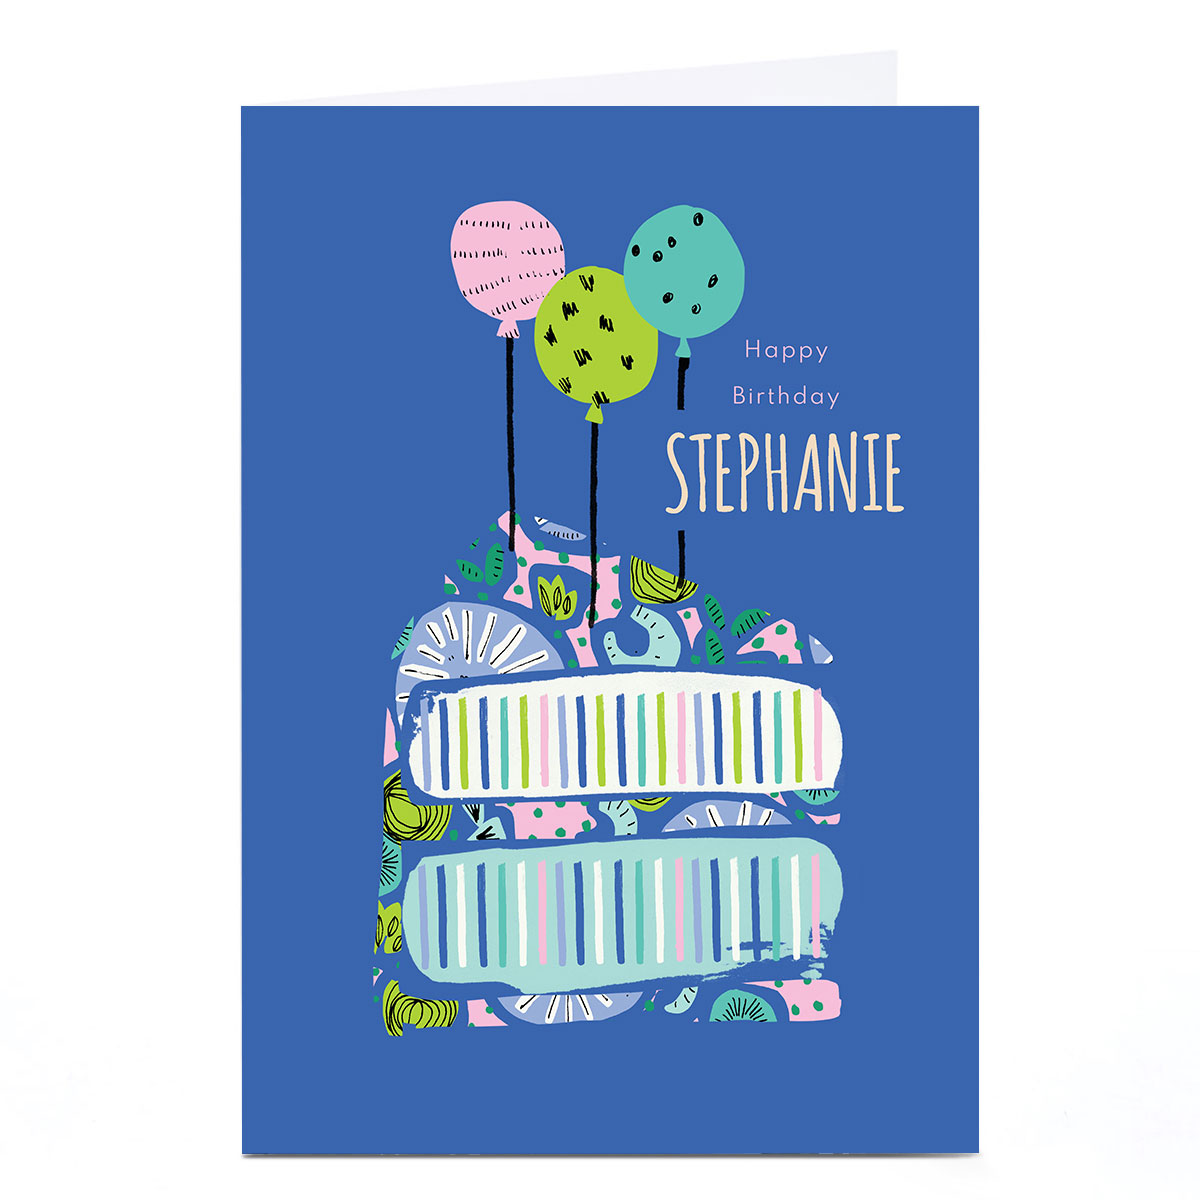 Personalised Rebecca Prinn Birthday Card - Blue Balloons